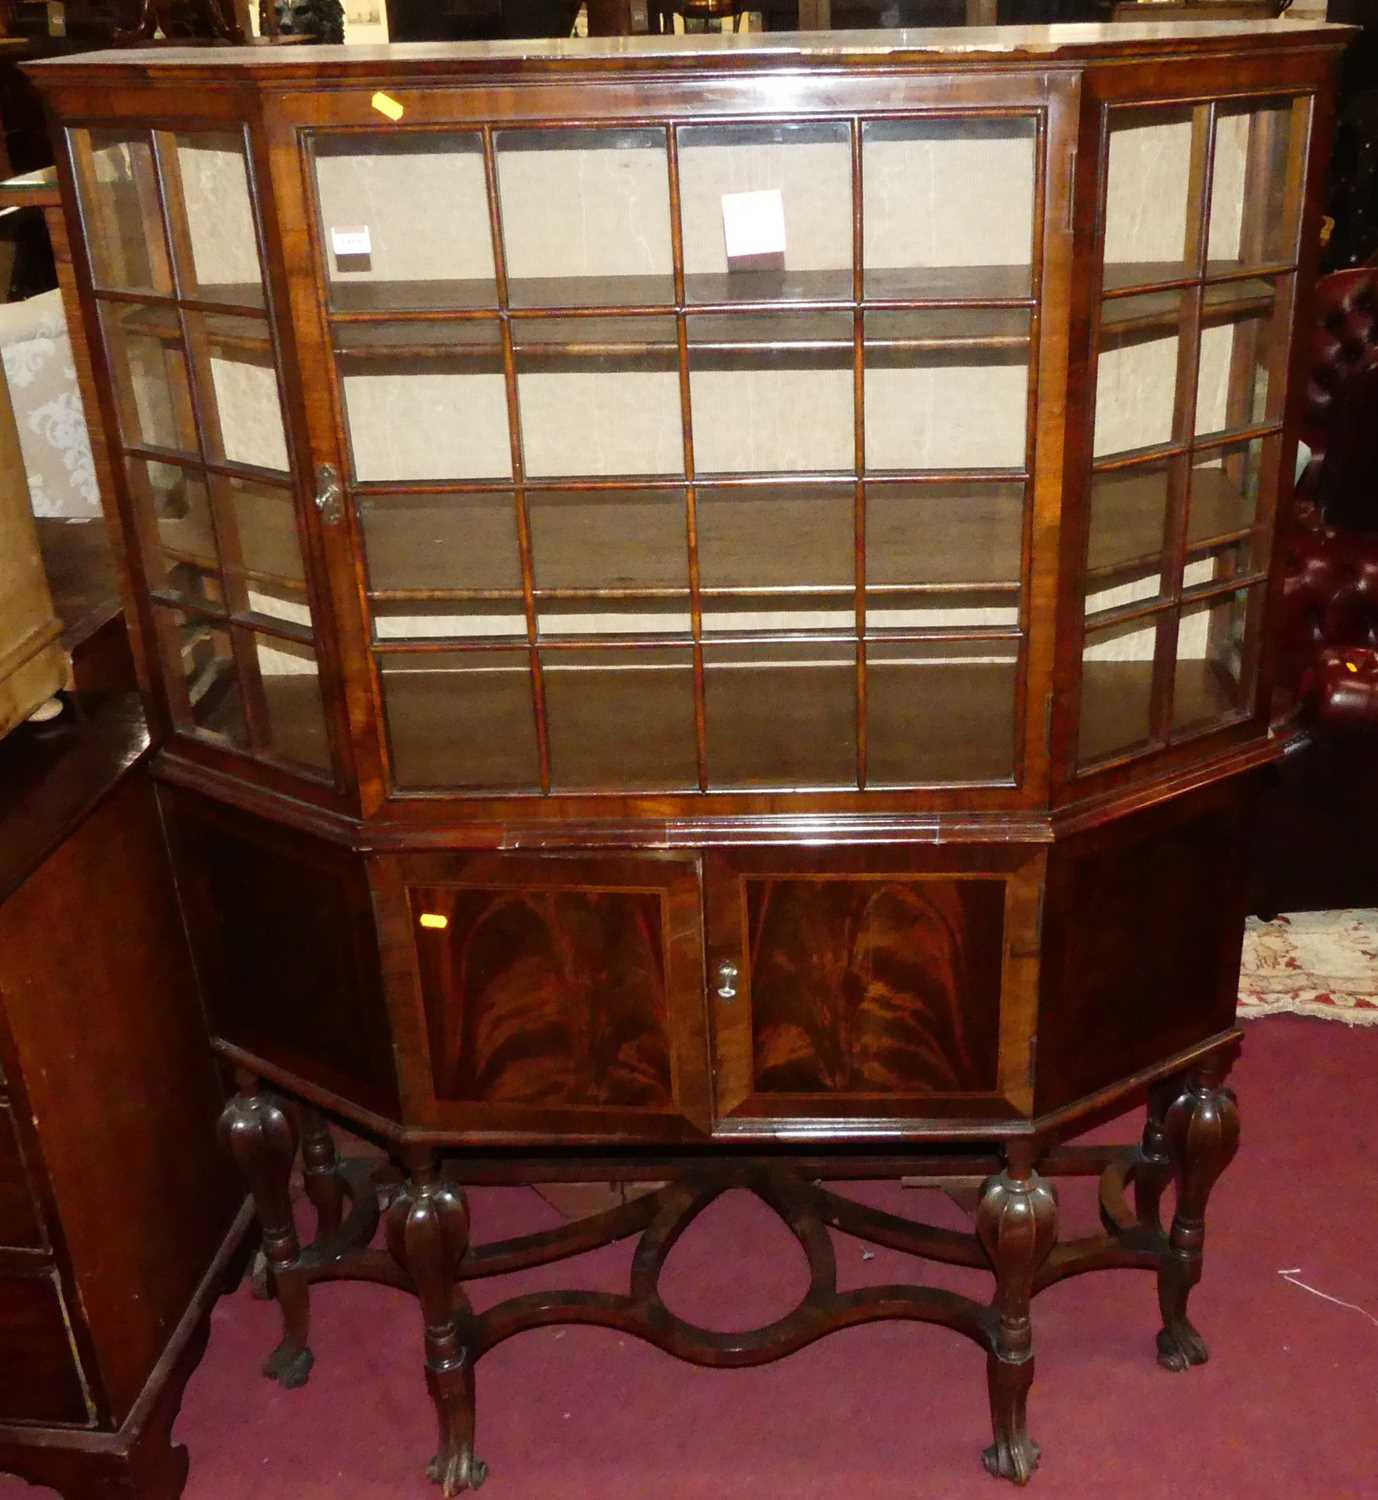 An early 20th century Dutch walnut single door glazed china display cabinet, having twin lower